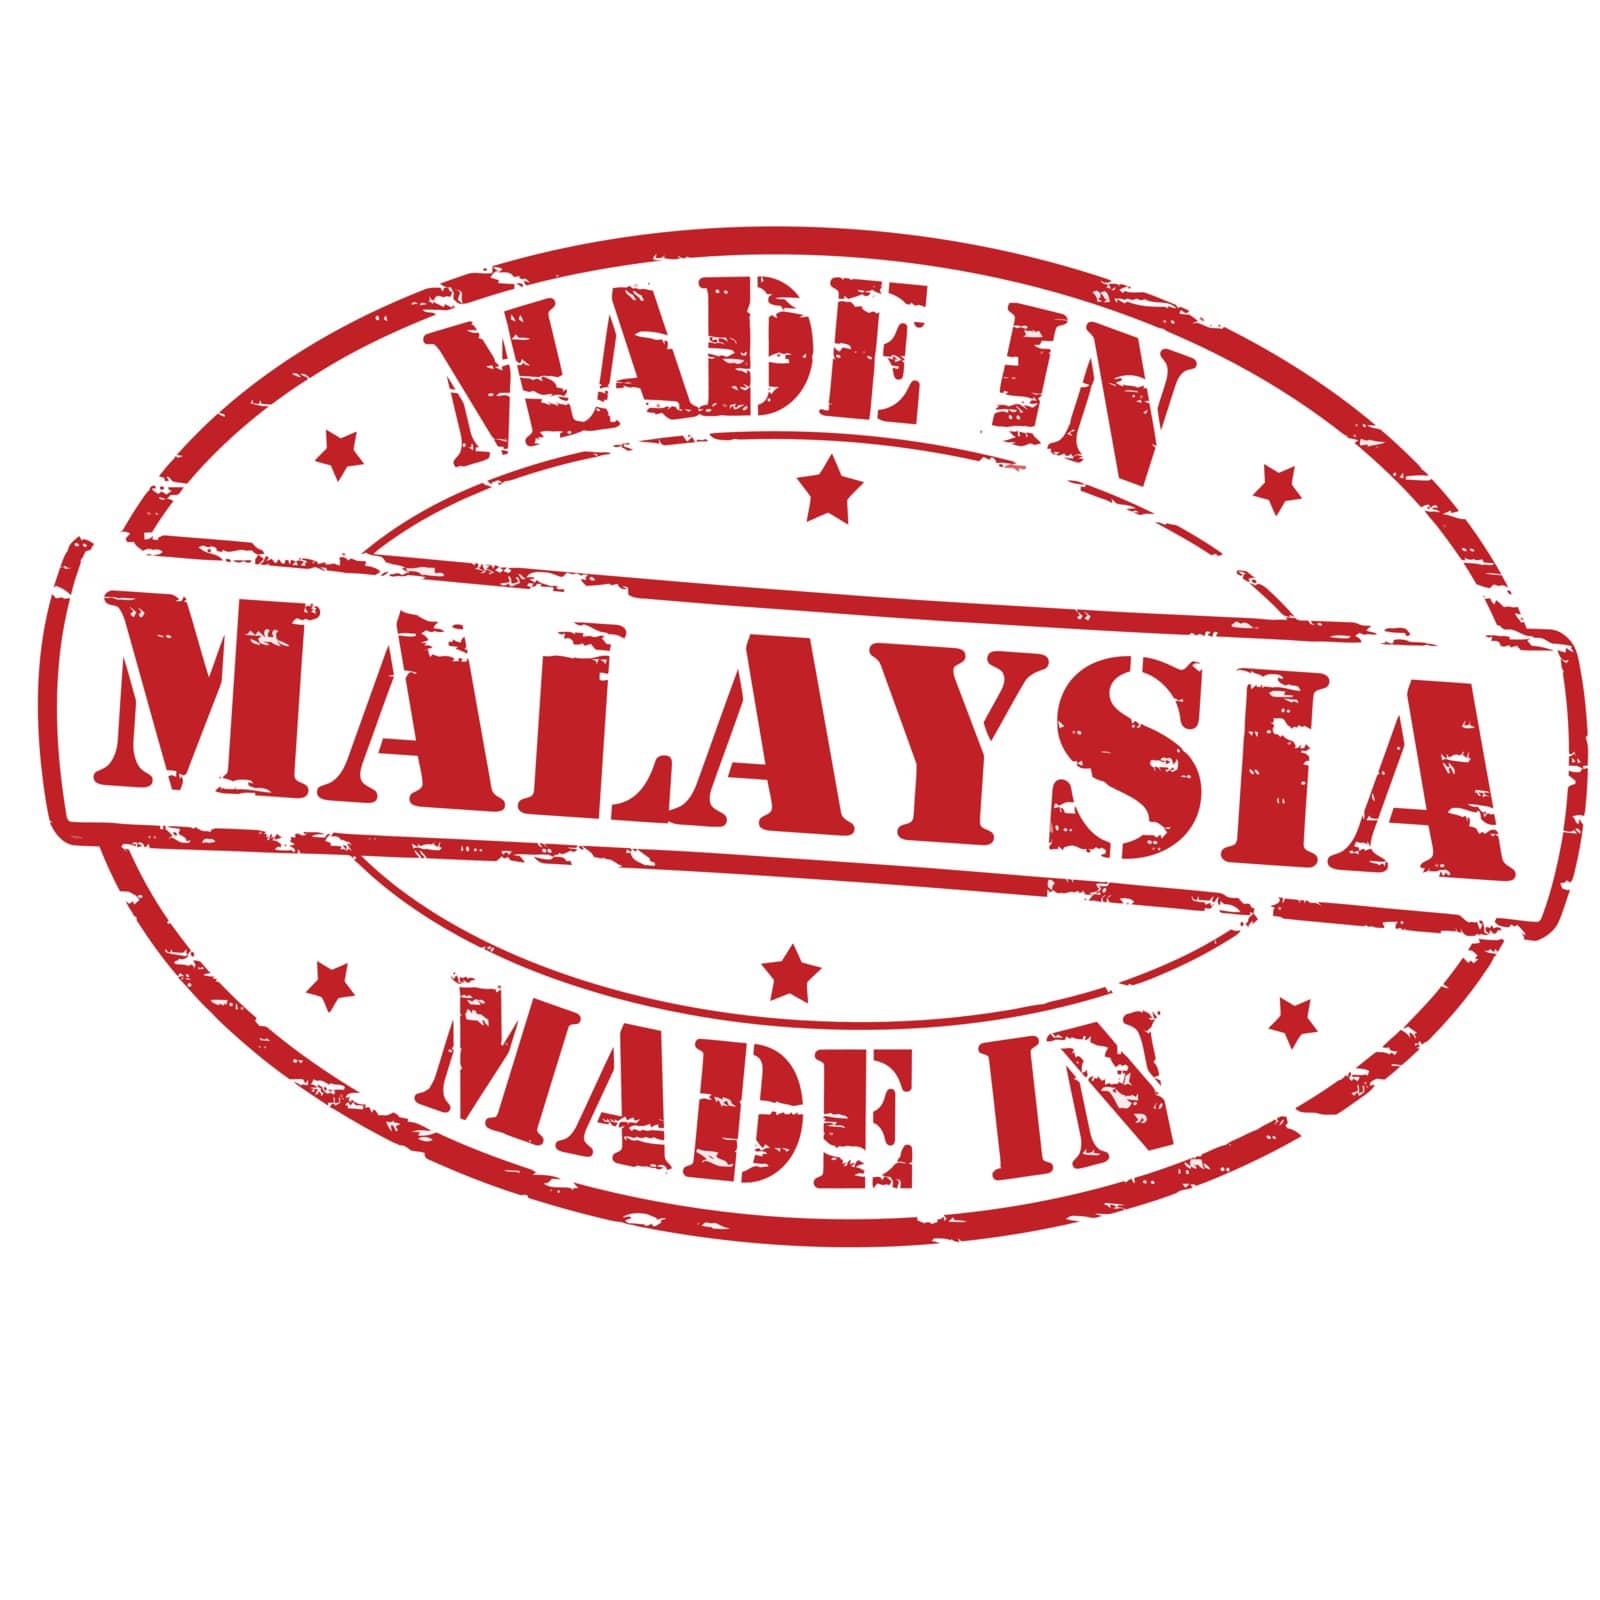 Made in Malaysia by carmenbobo